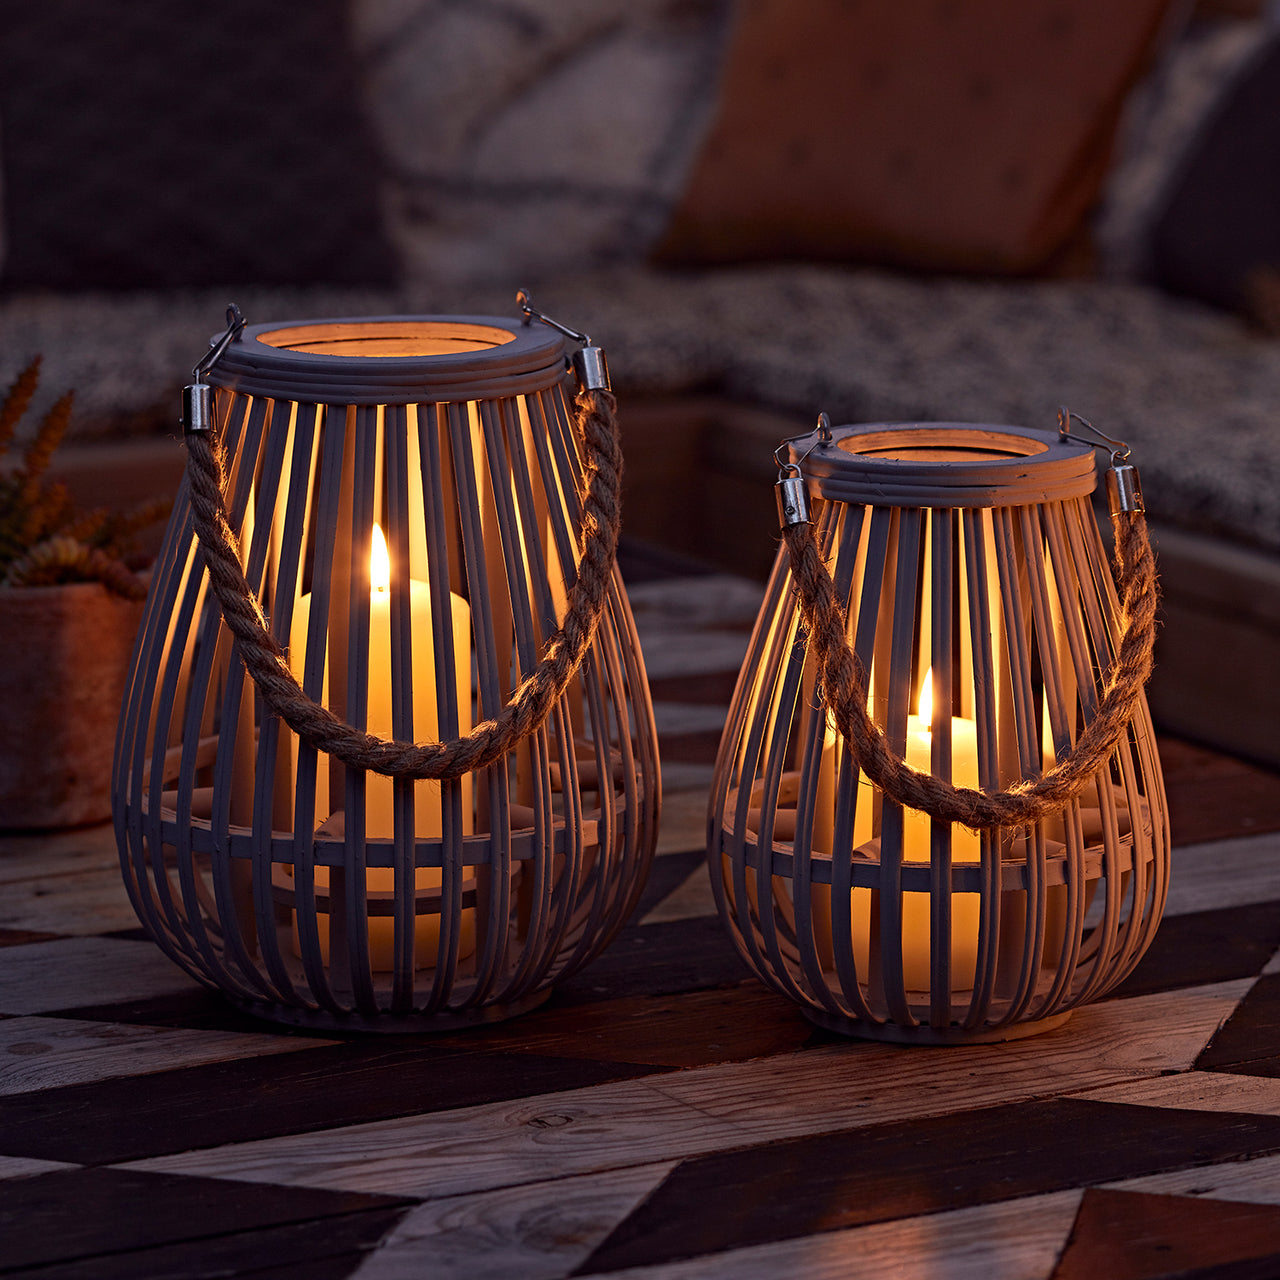 Fraser Large Grey Bamboo Lantern with TruGlow® Candle